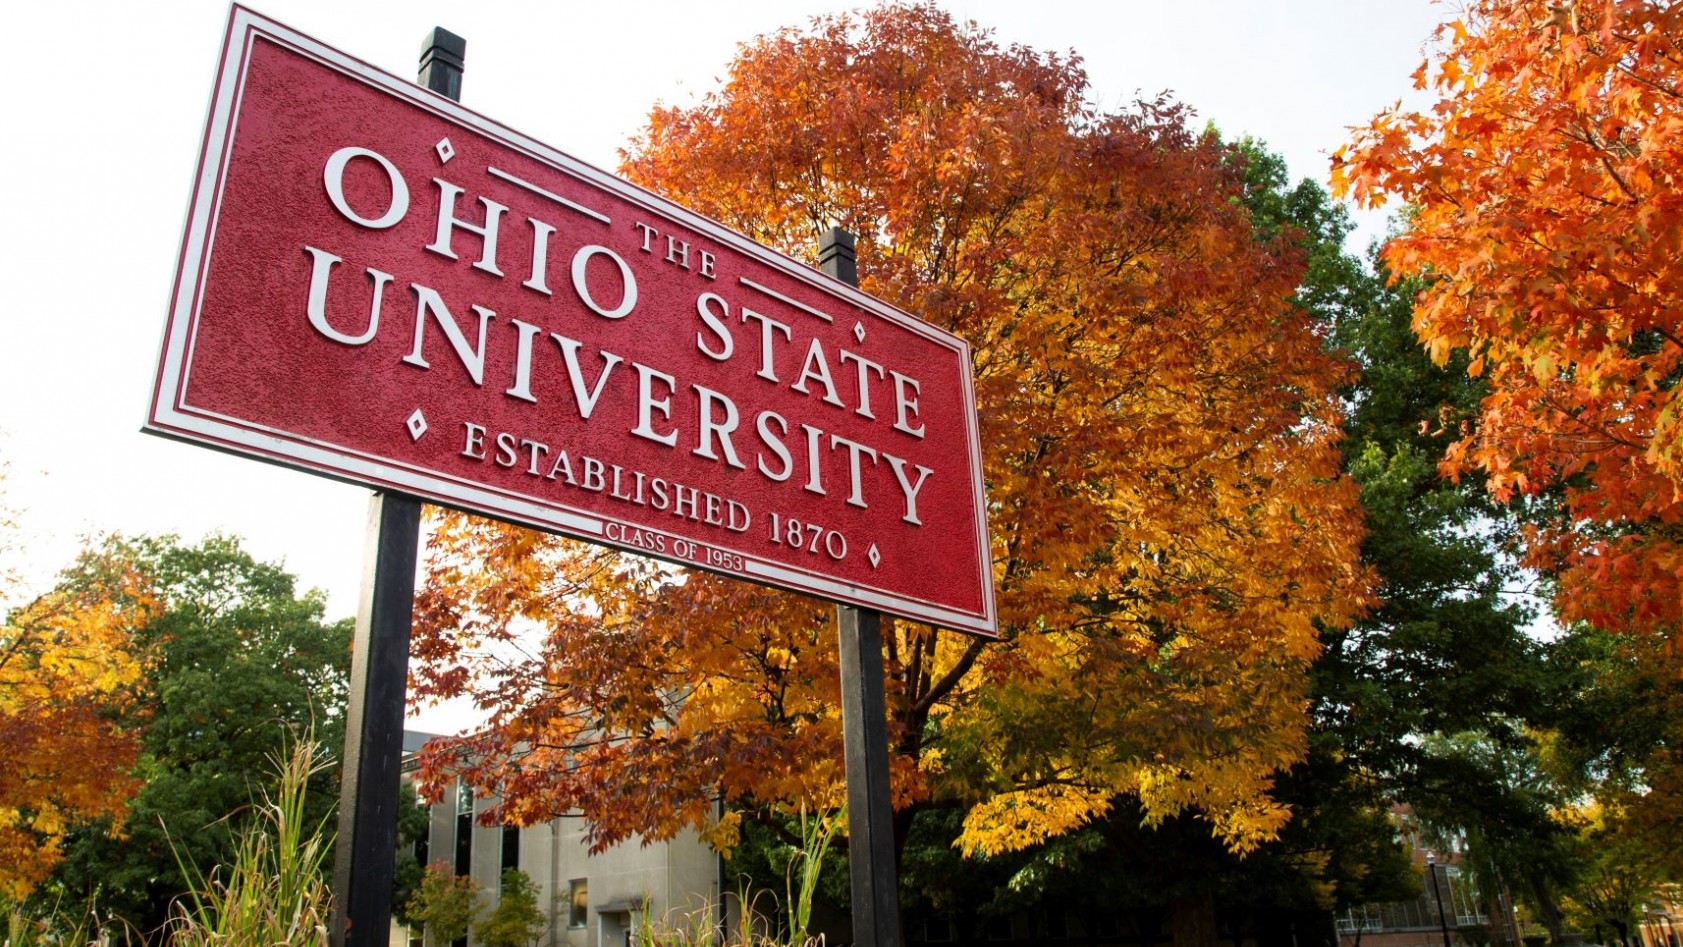 The Ohio State University Campus